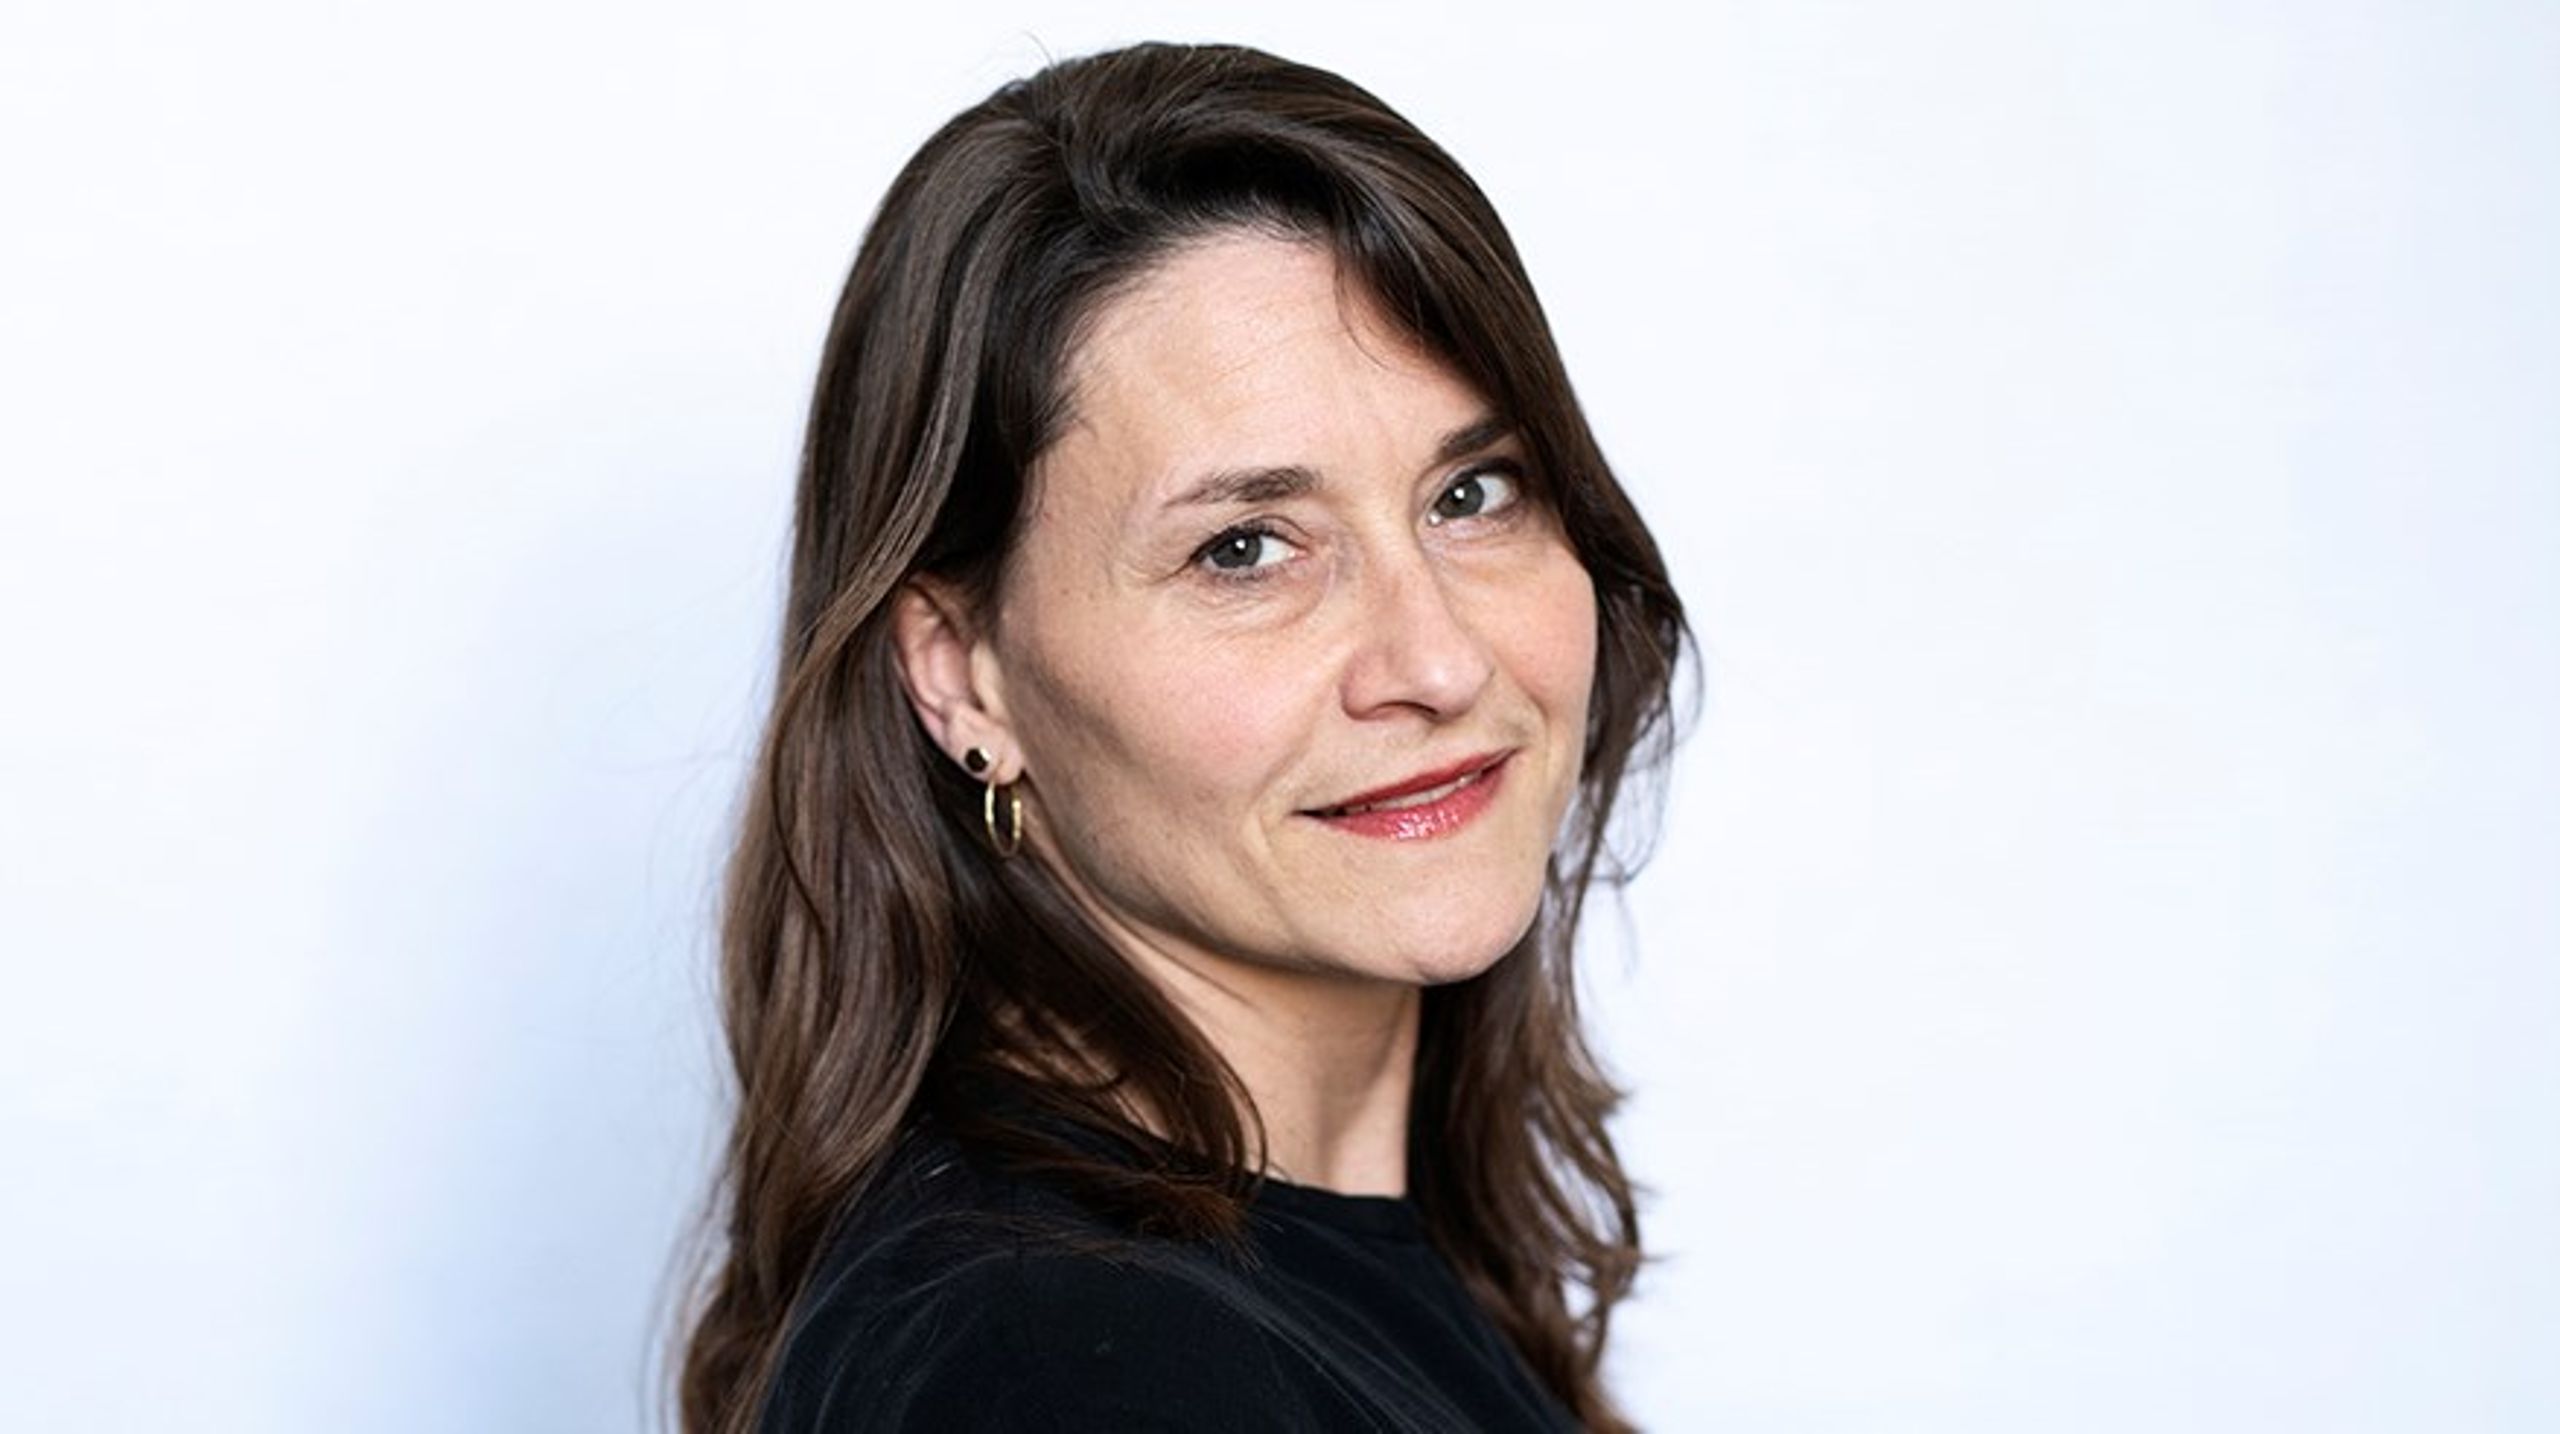 Carolina Magdalene Maier stopper som sekretariatsleder for Dansk Folkeoplysnings Samråd.